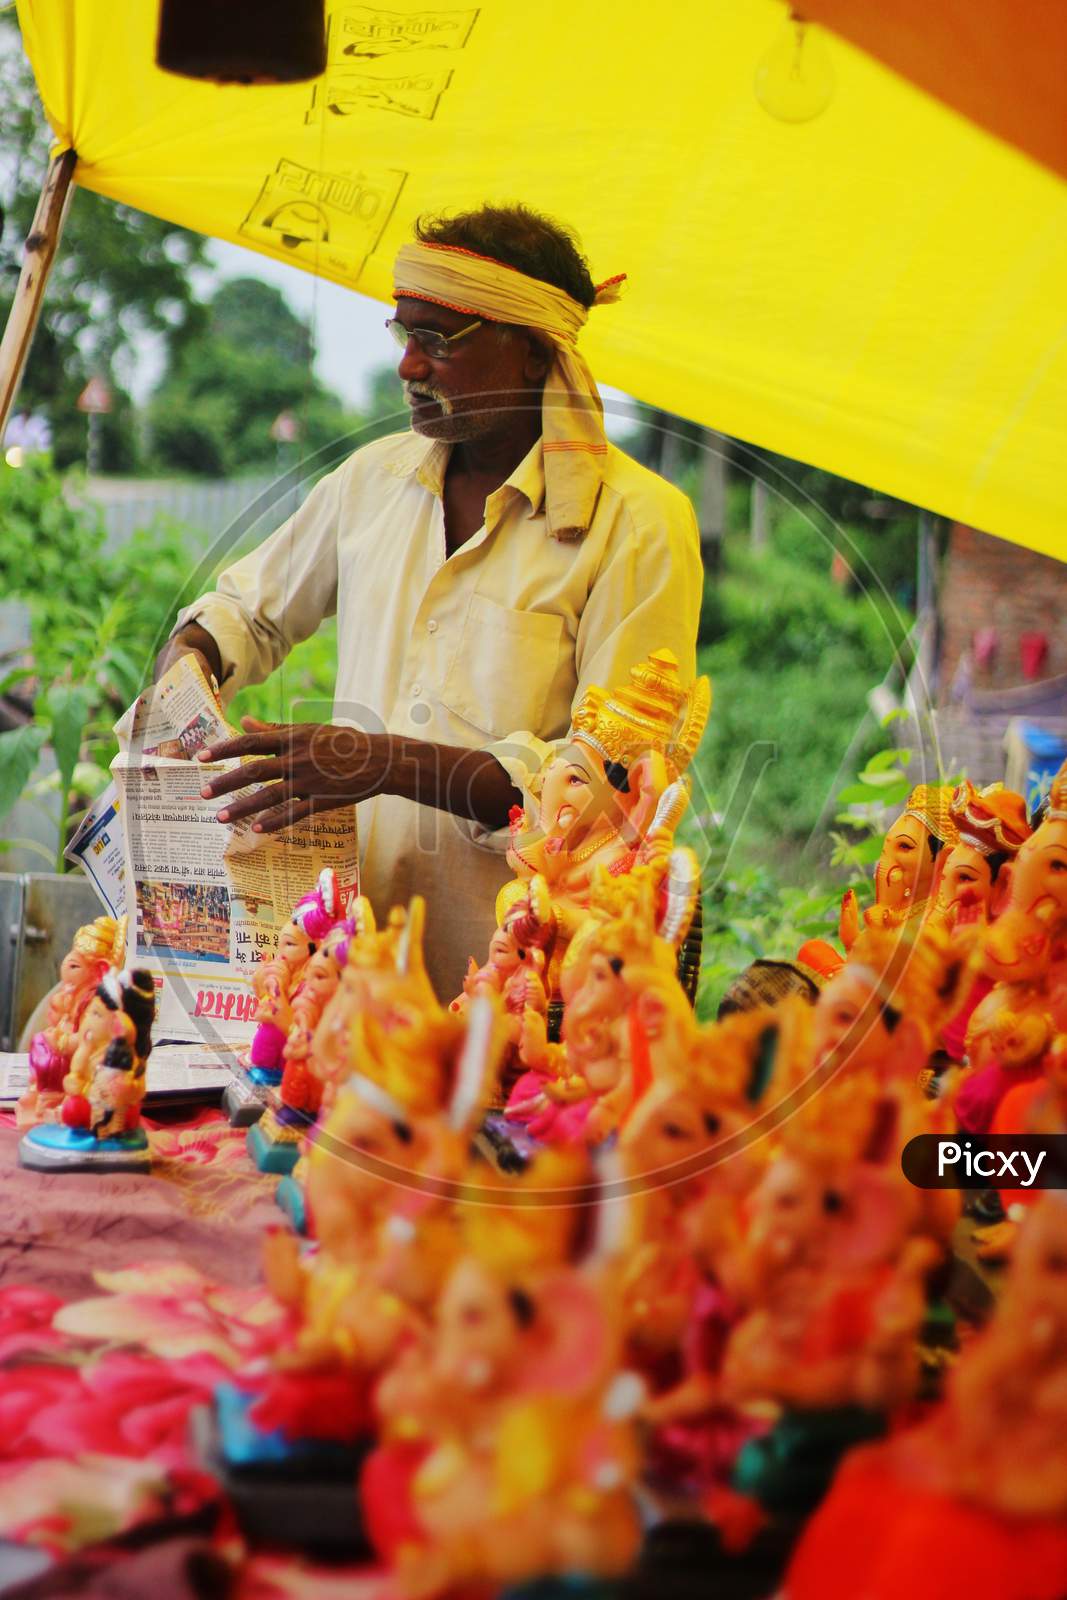 Shop Vendor Of Idols Of Lord Ganesha Selling Idols